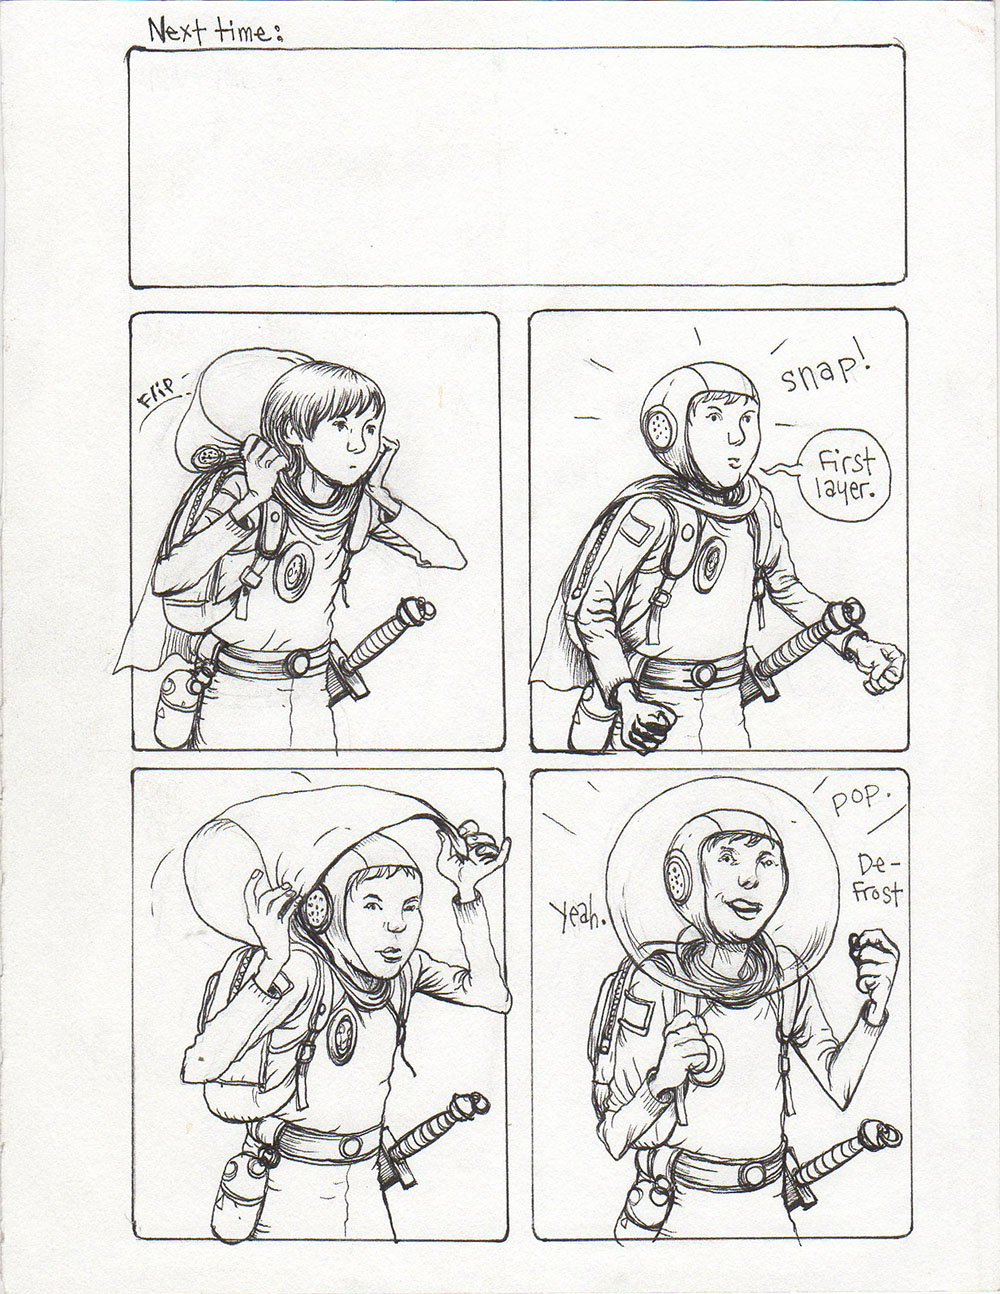 Proxima Centauri #2 - page 13 panels 4, 5, 6 & 7